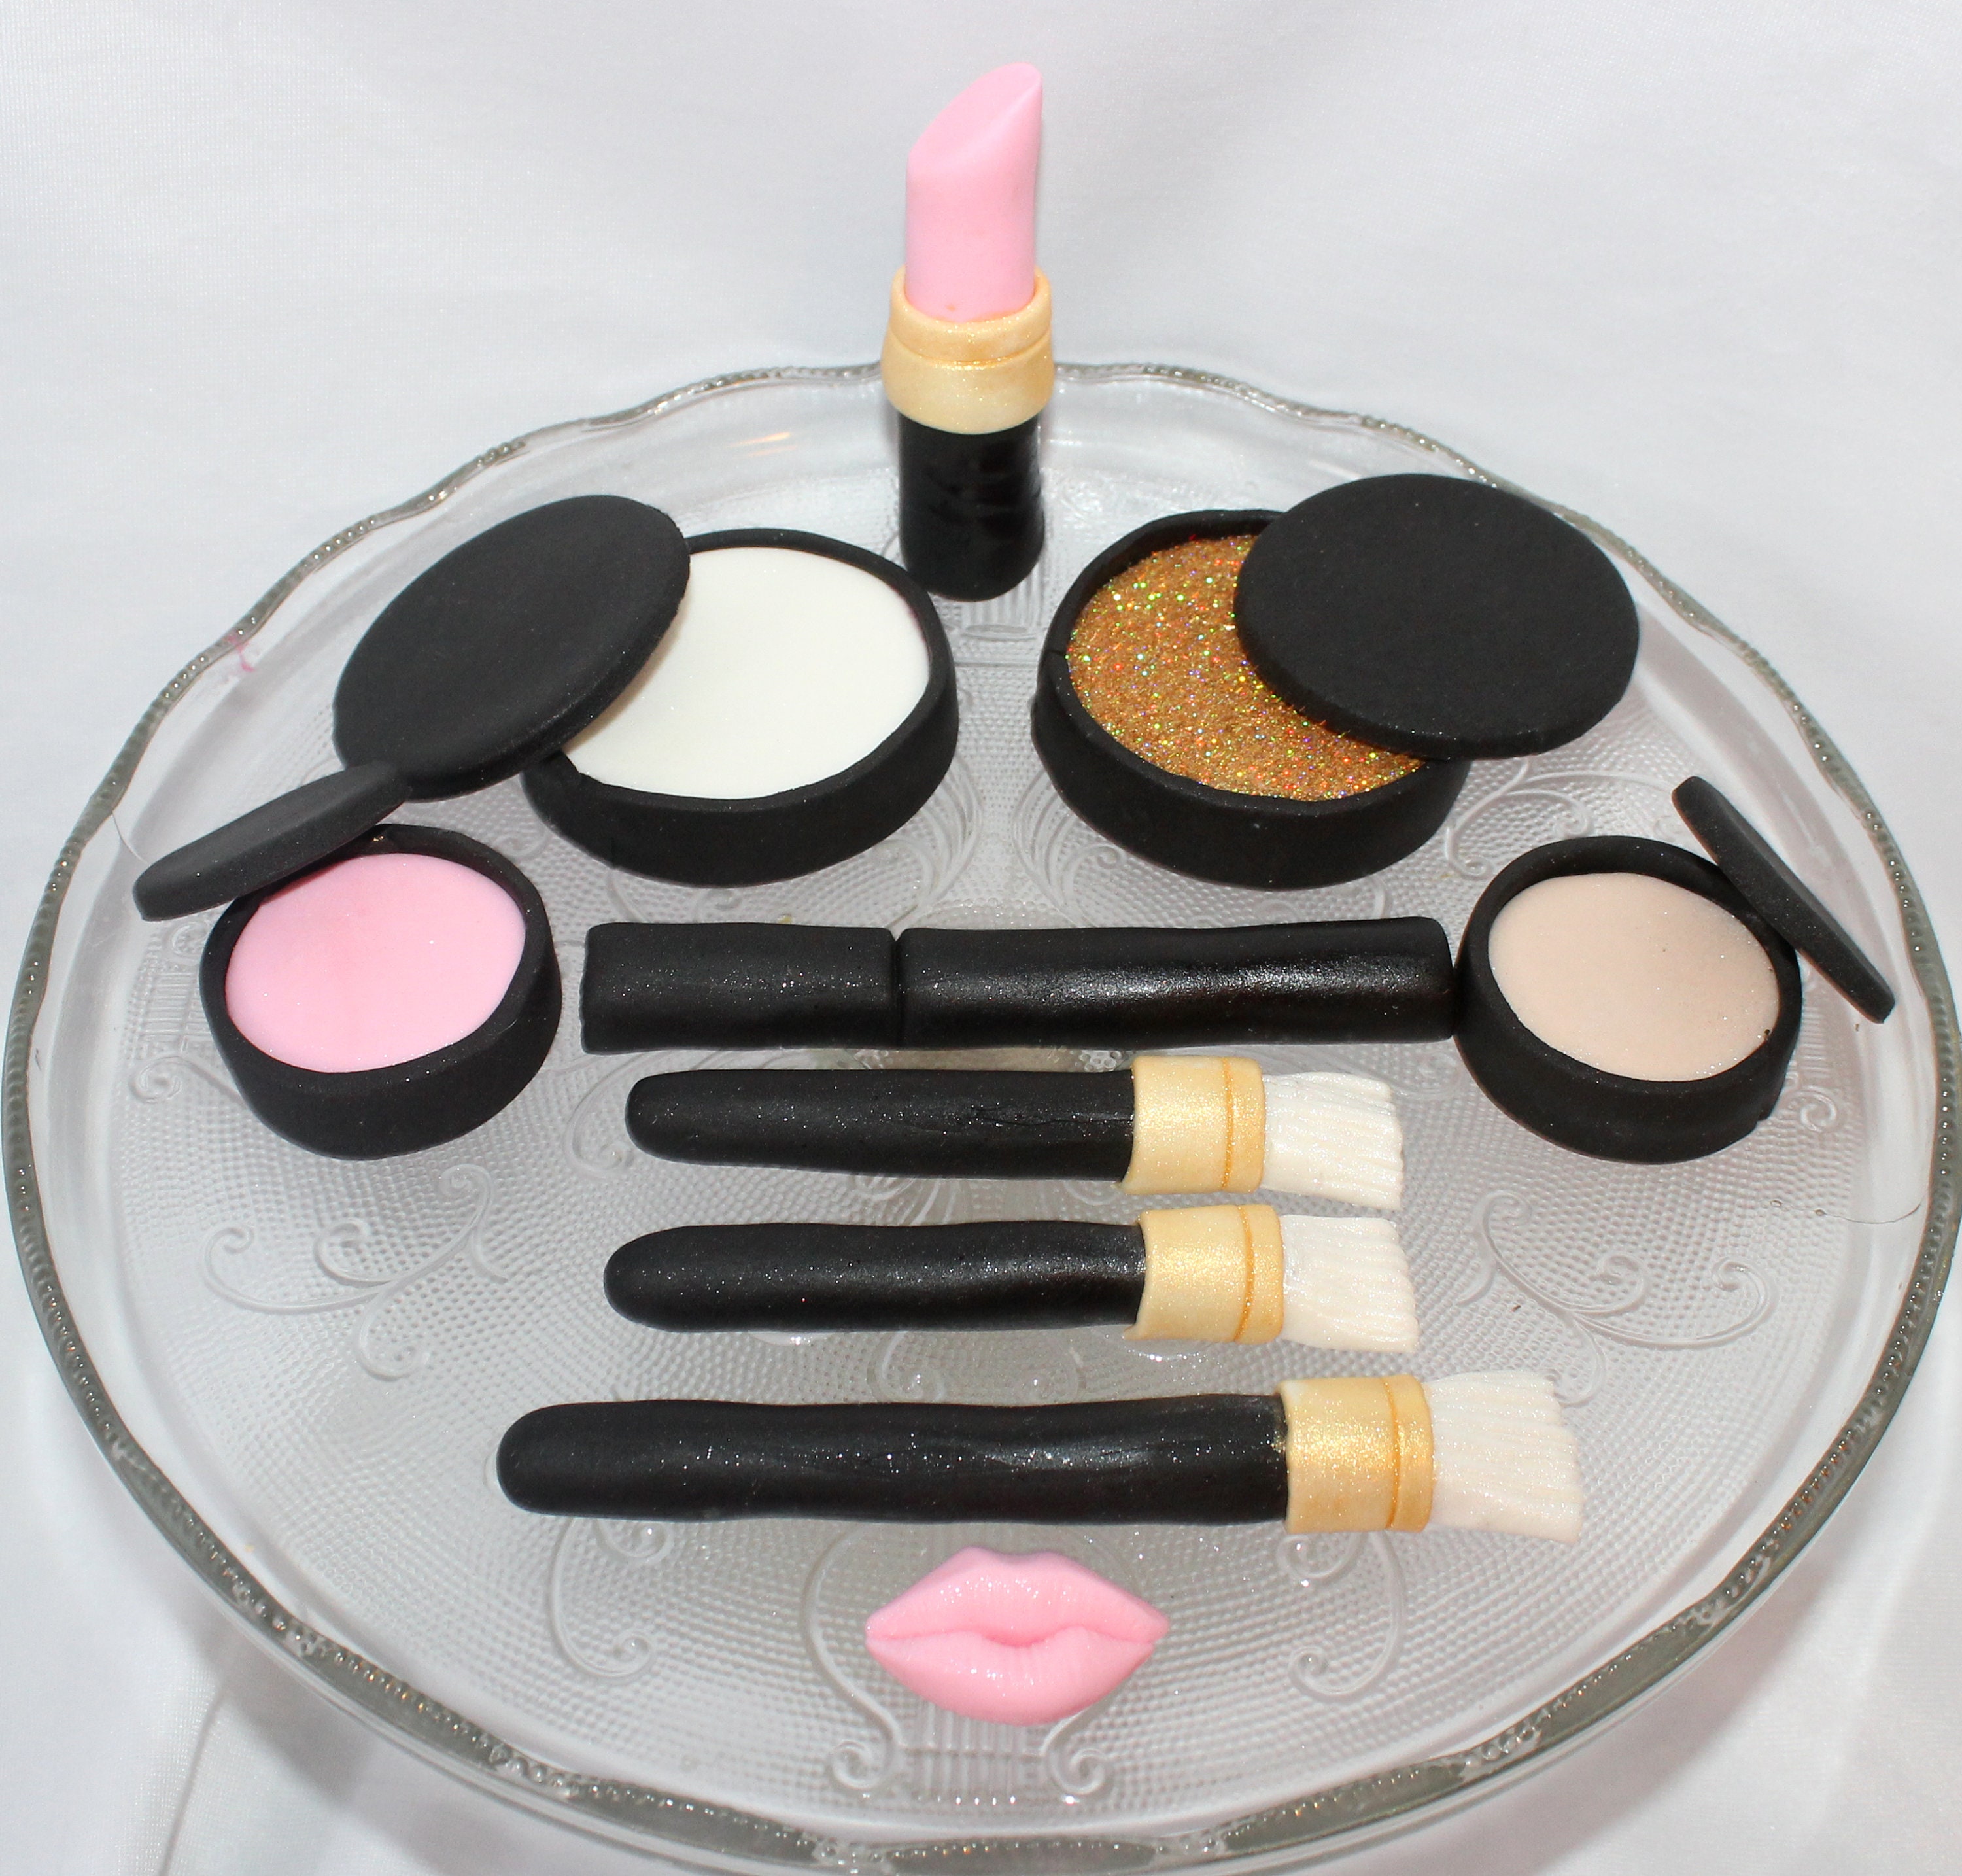 Makeup set temed birthday cake 🎂 - PURE TASTY CAKES | Facebook